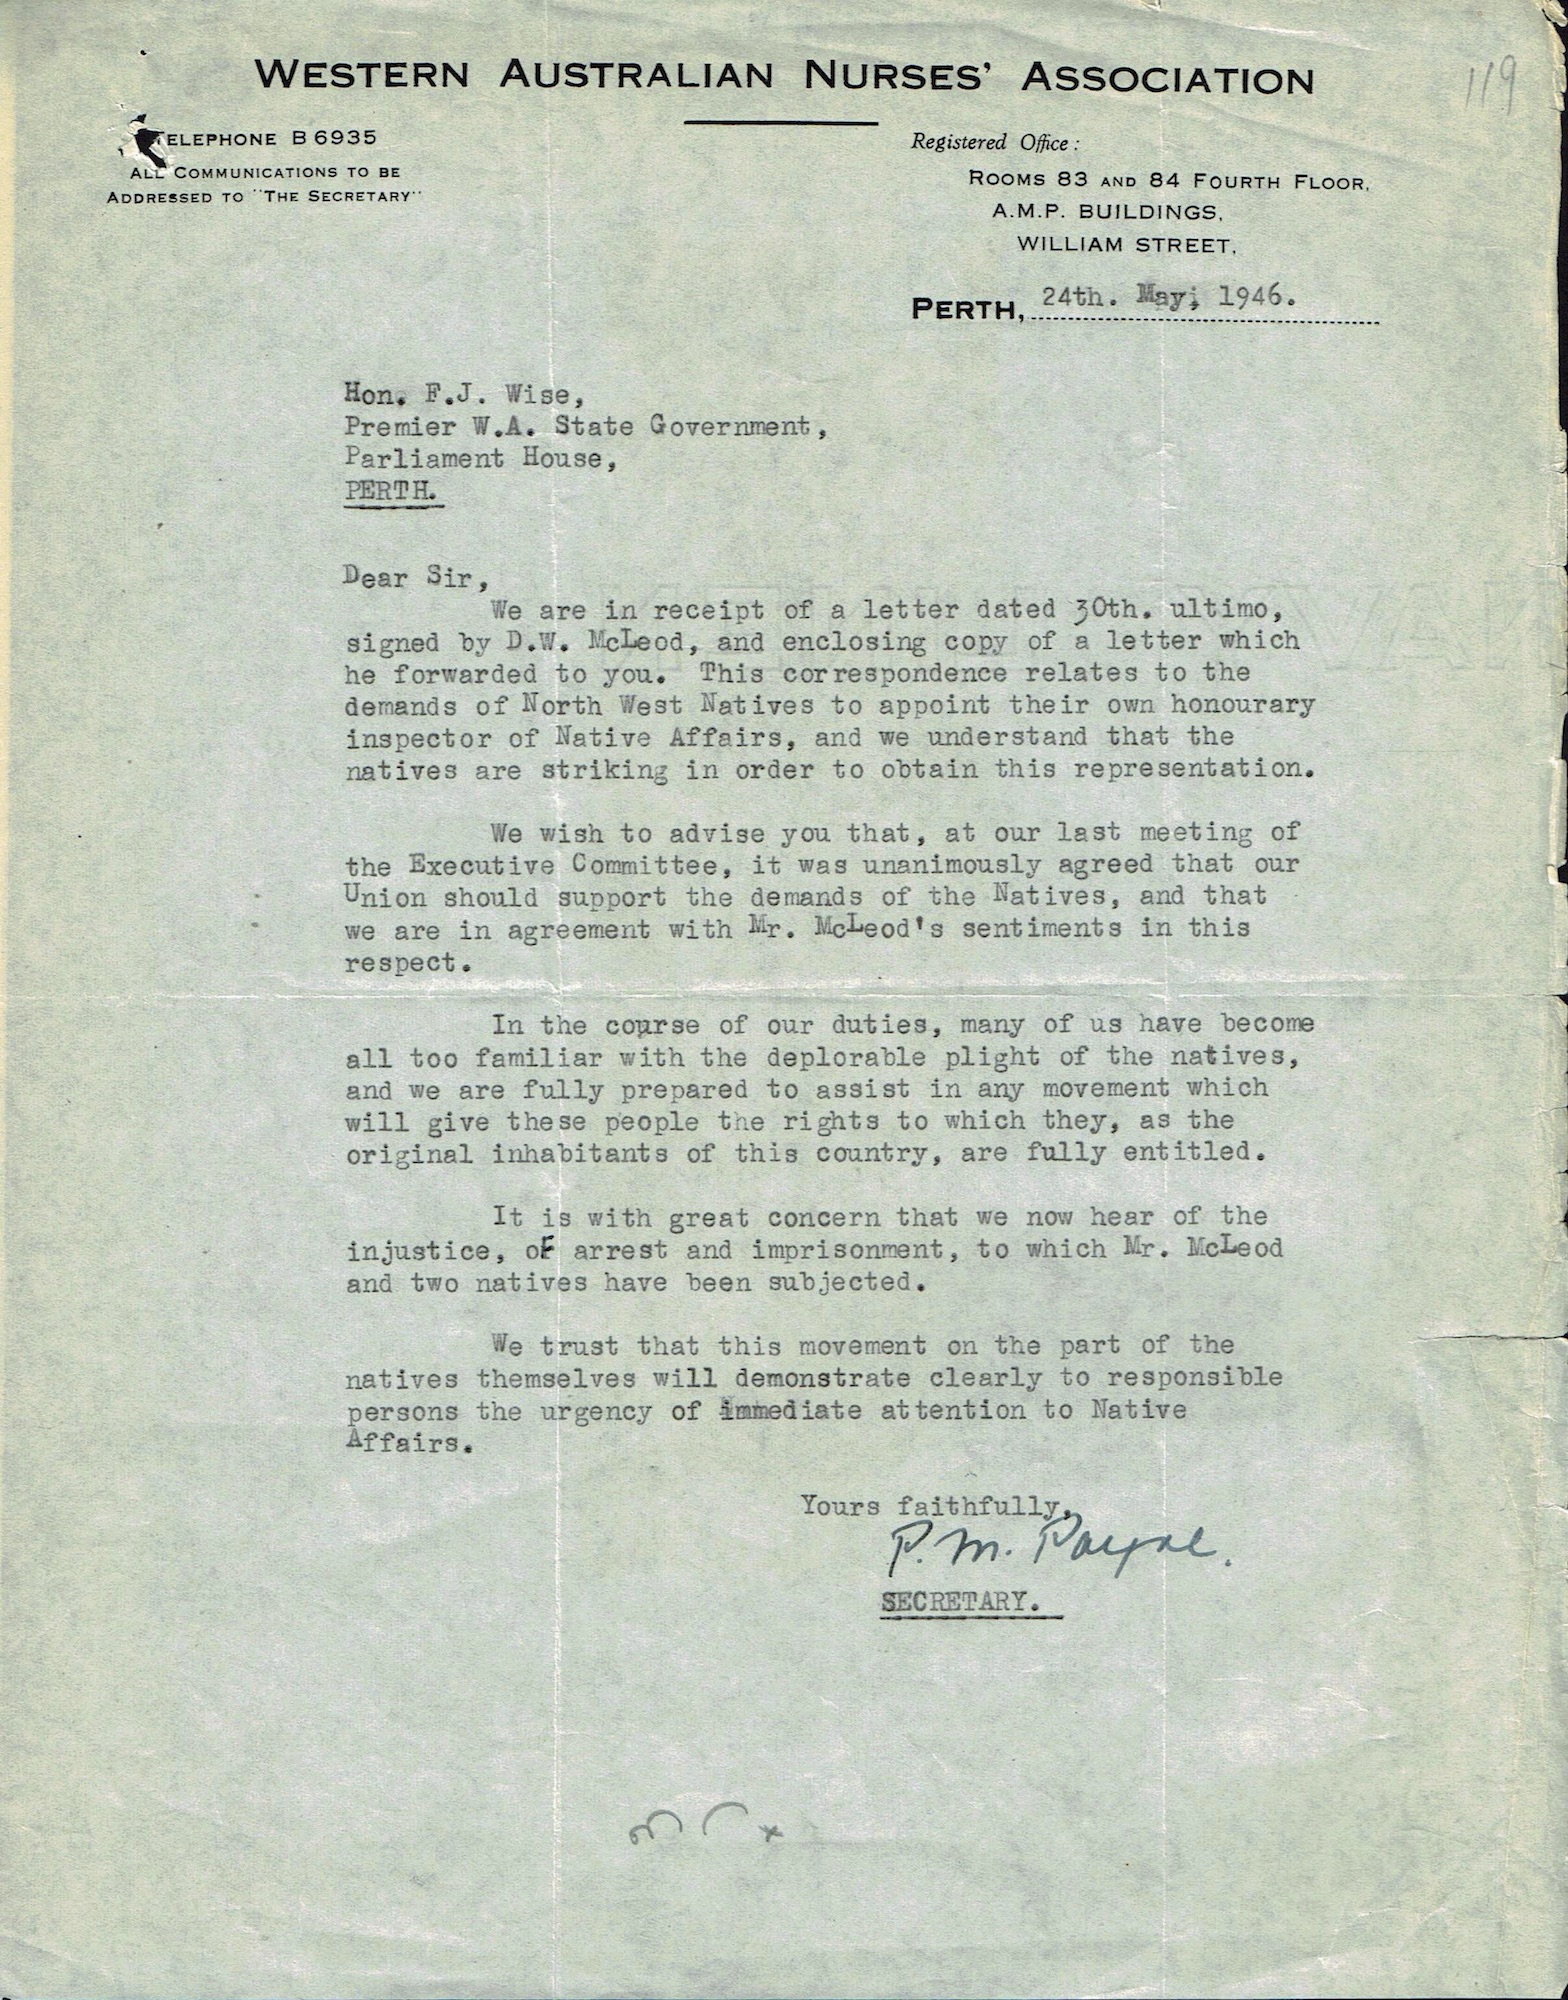 WA Nurses' Association to Premier Wise, 24 May 1946